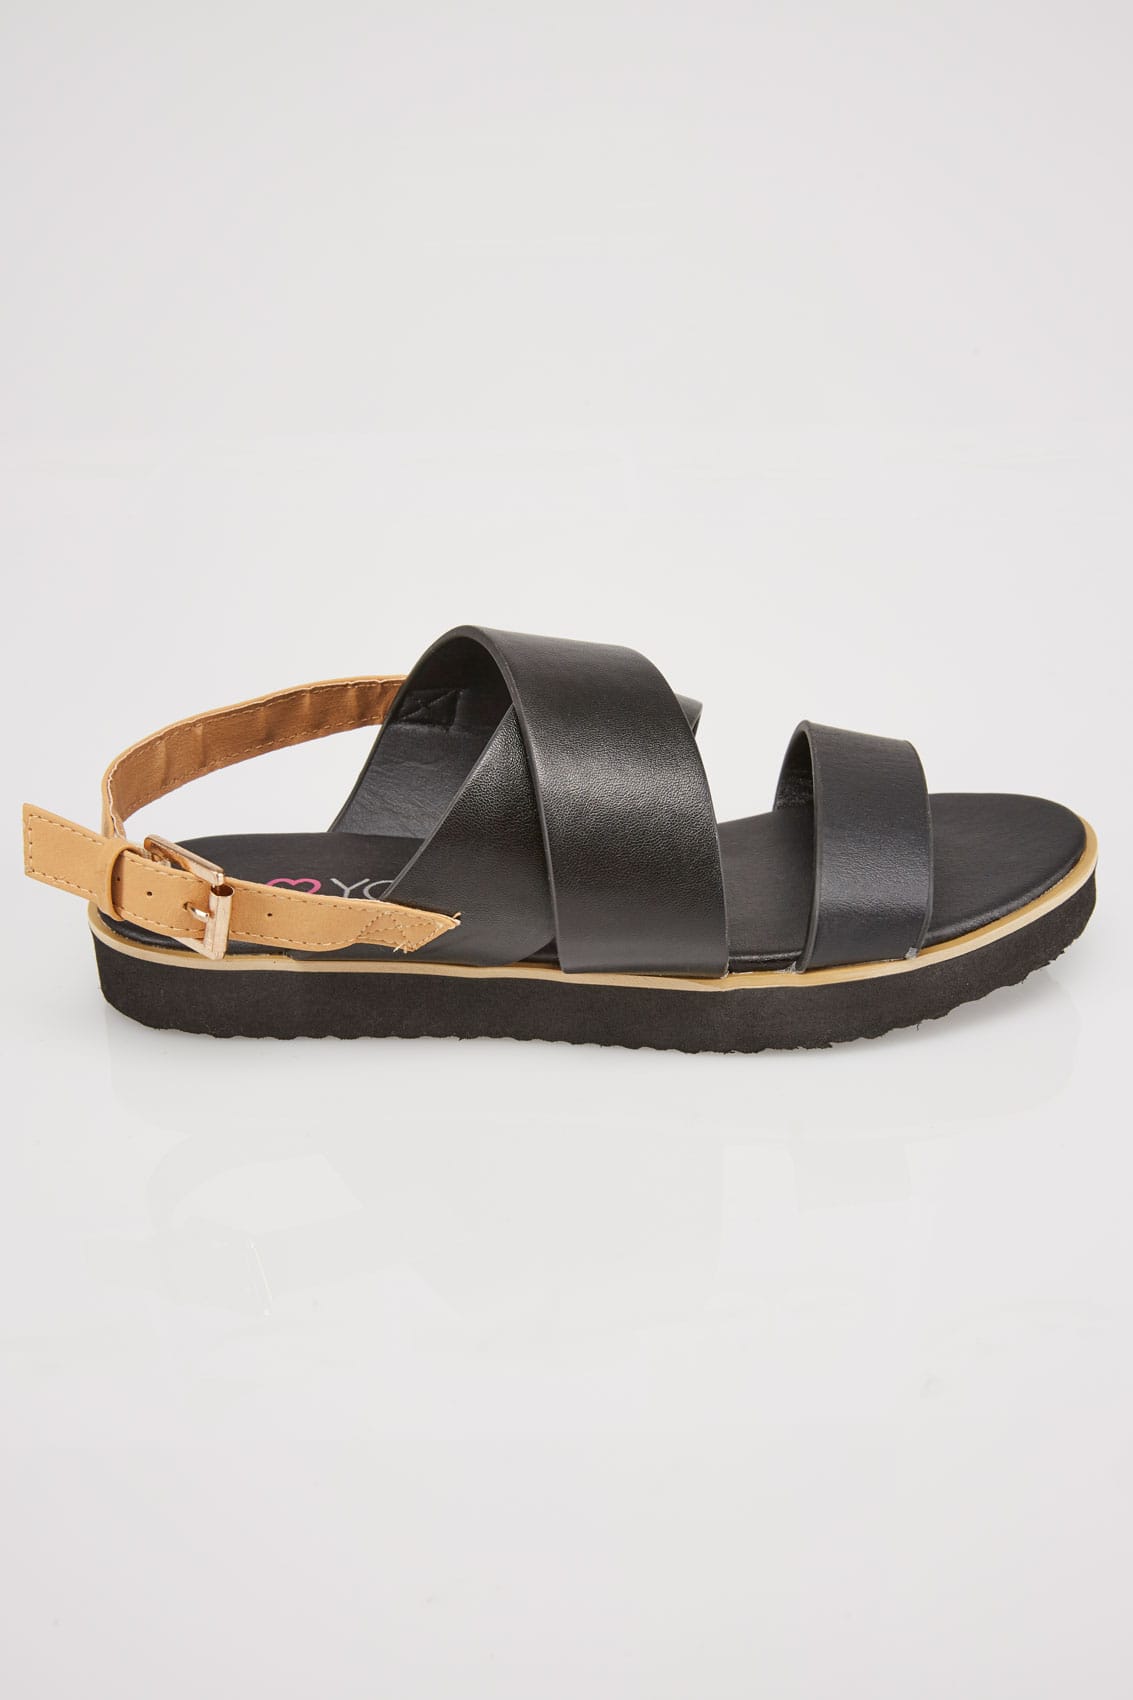 dressy black flat sandals